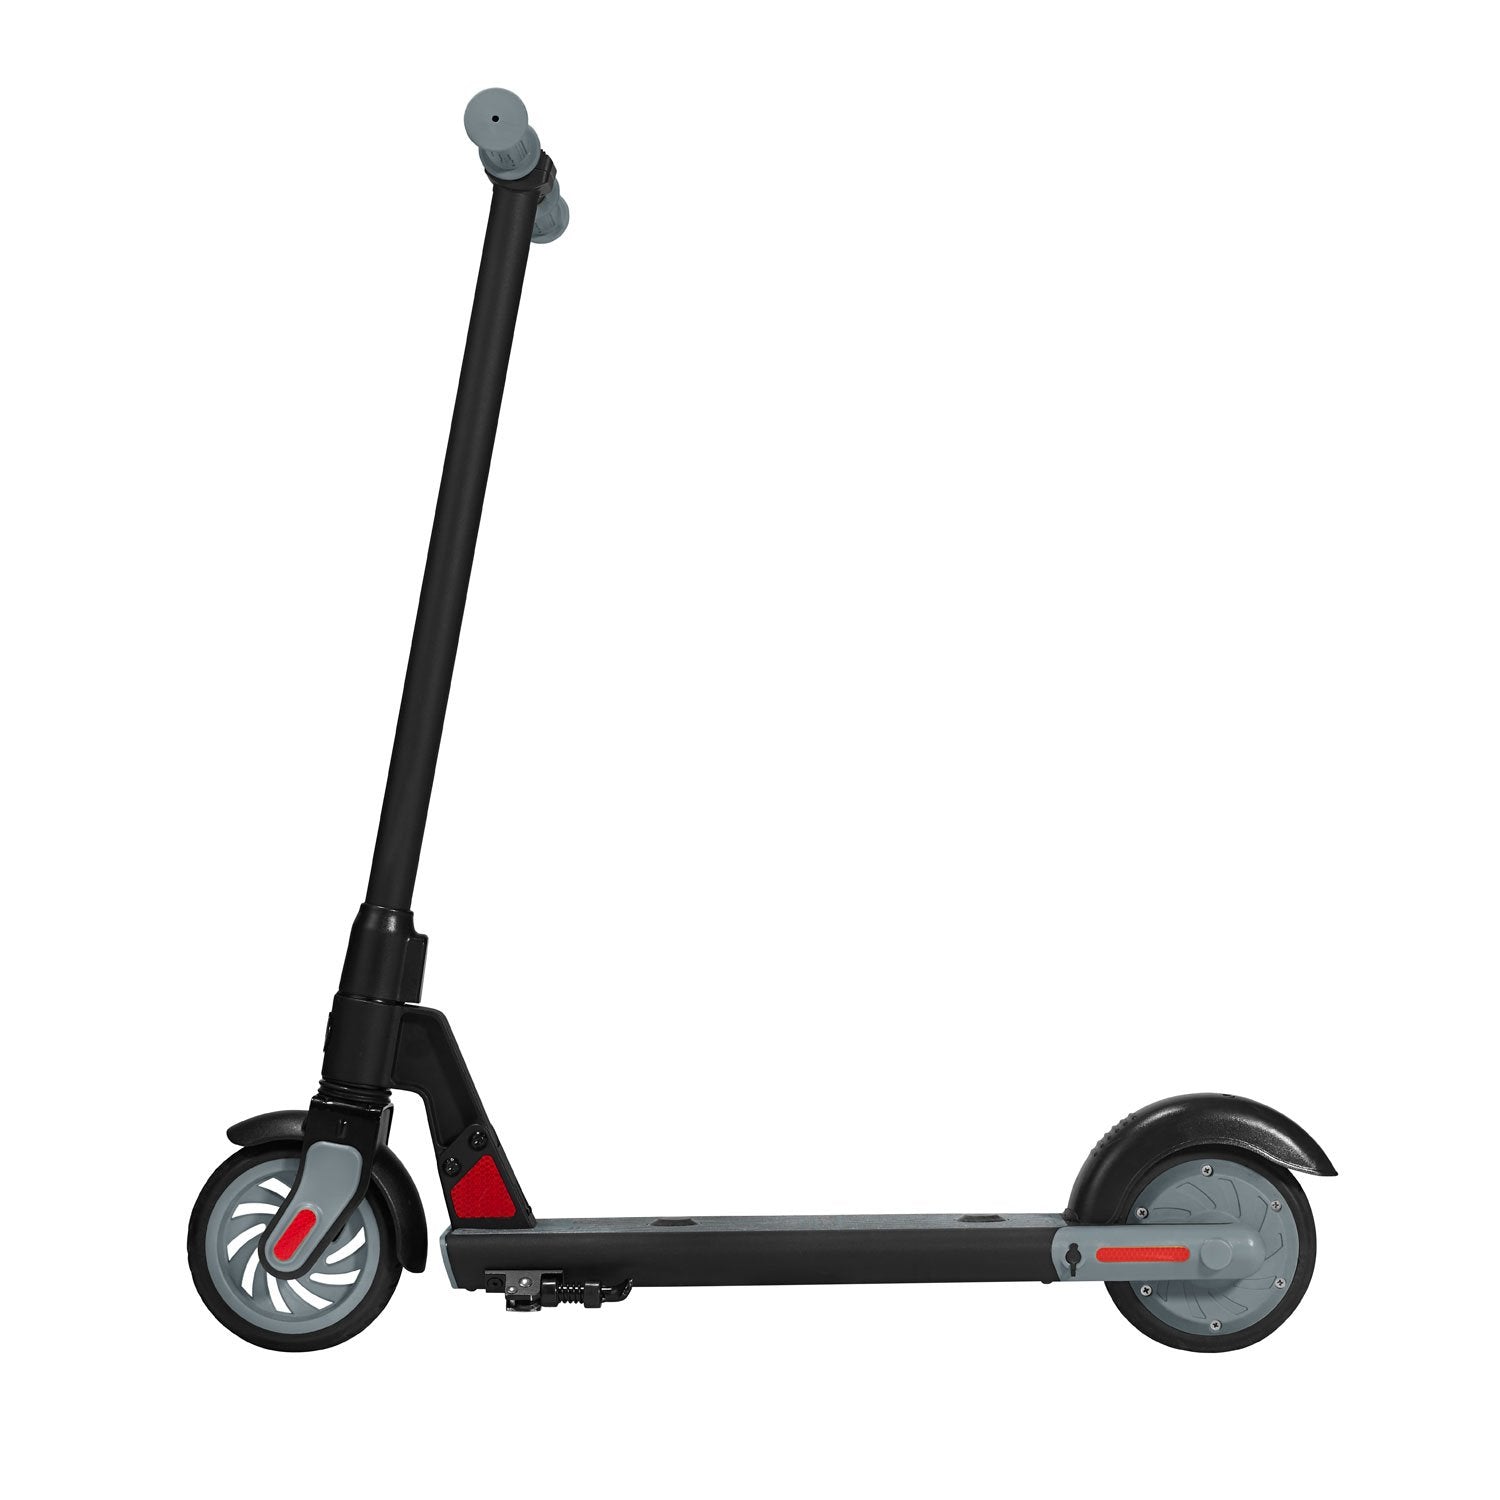 Black gks electric scooter for kids side image